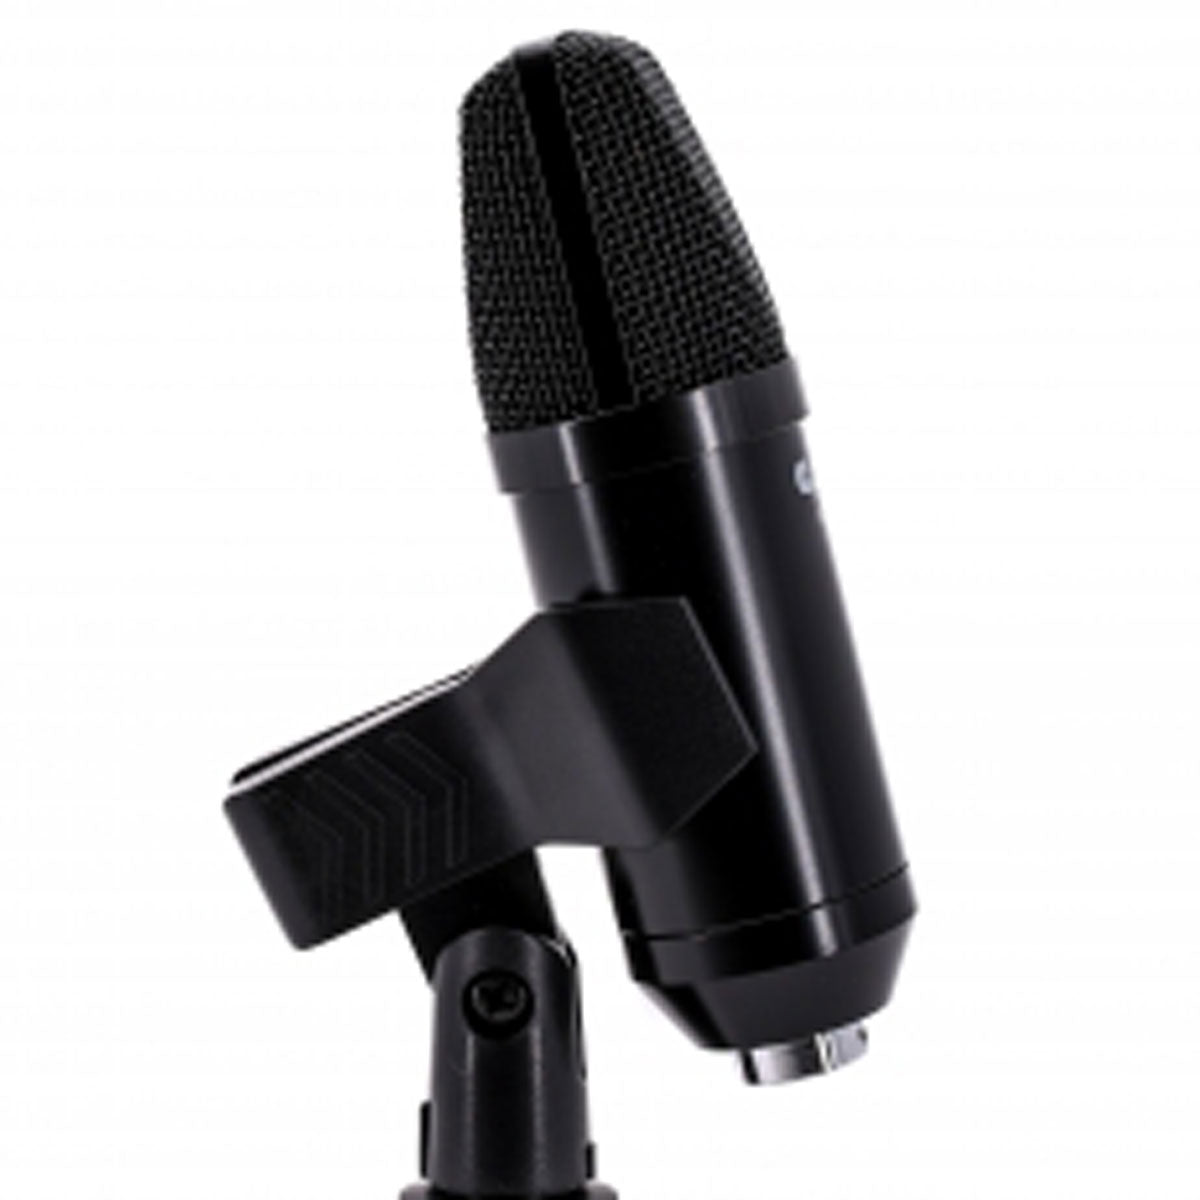 CAD U29 Side Address Studio USB Microphone